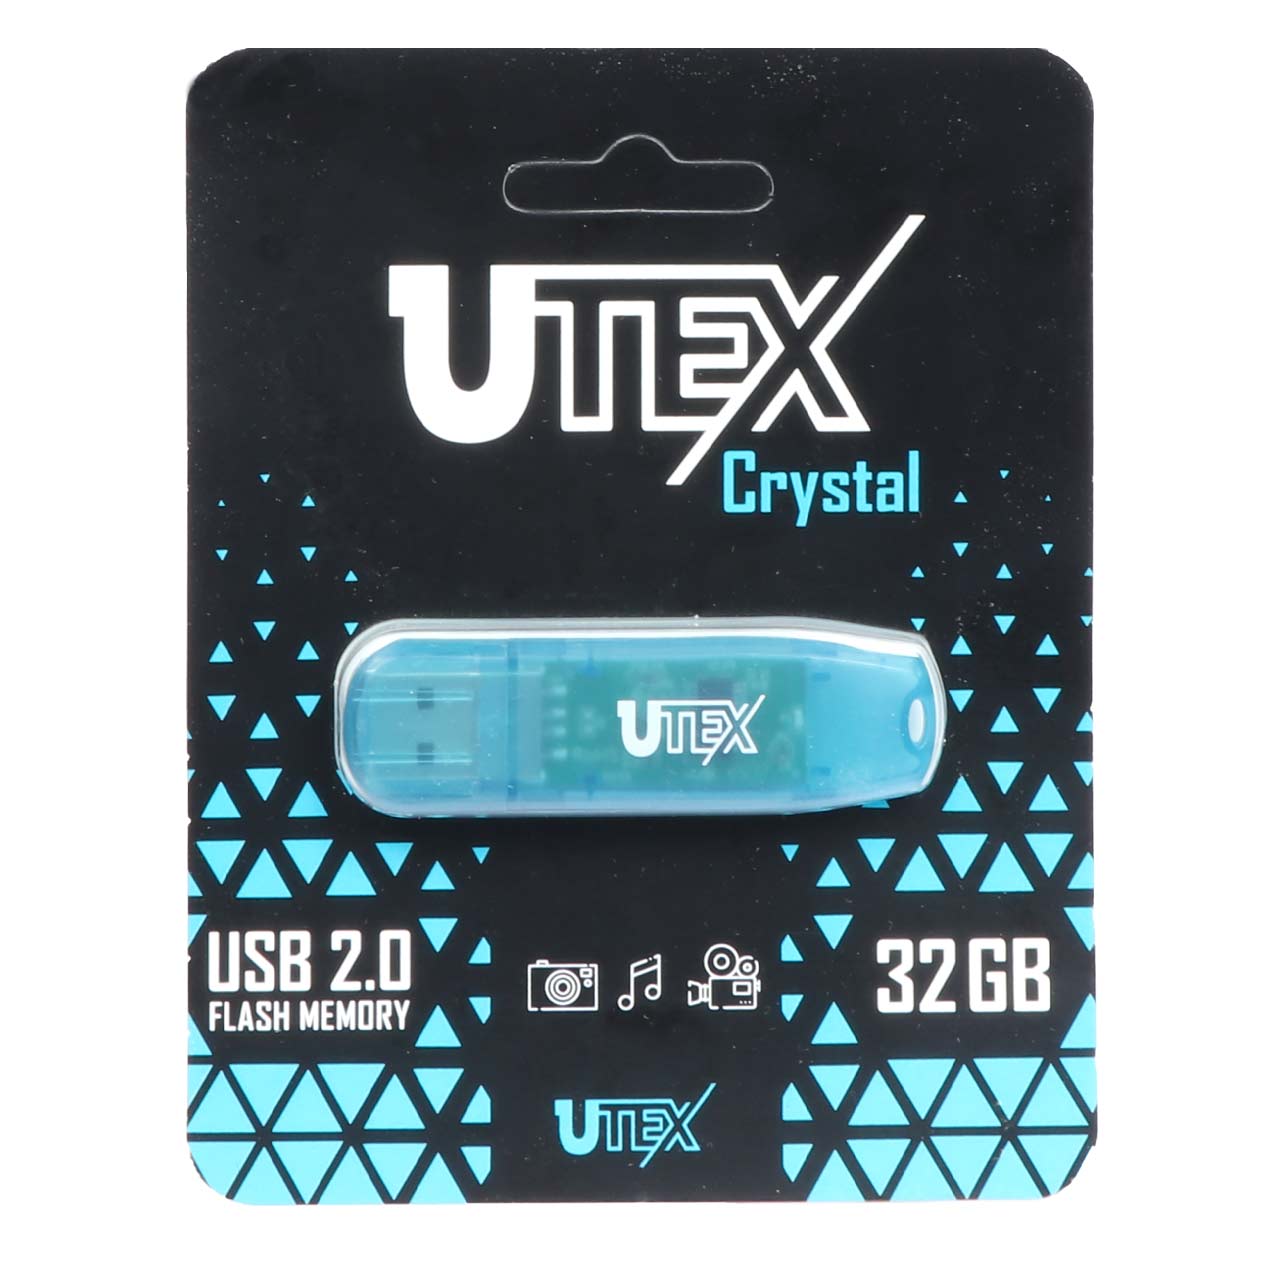 UTEX Crystal USB2.0 Flash Memory - 32GB